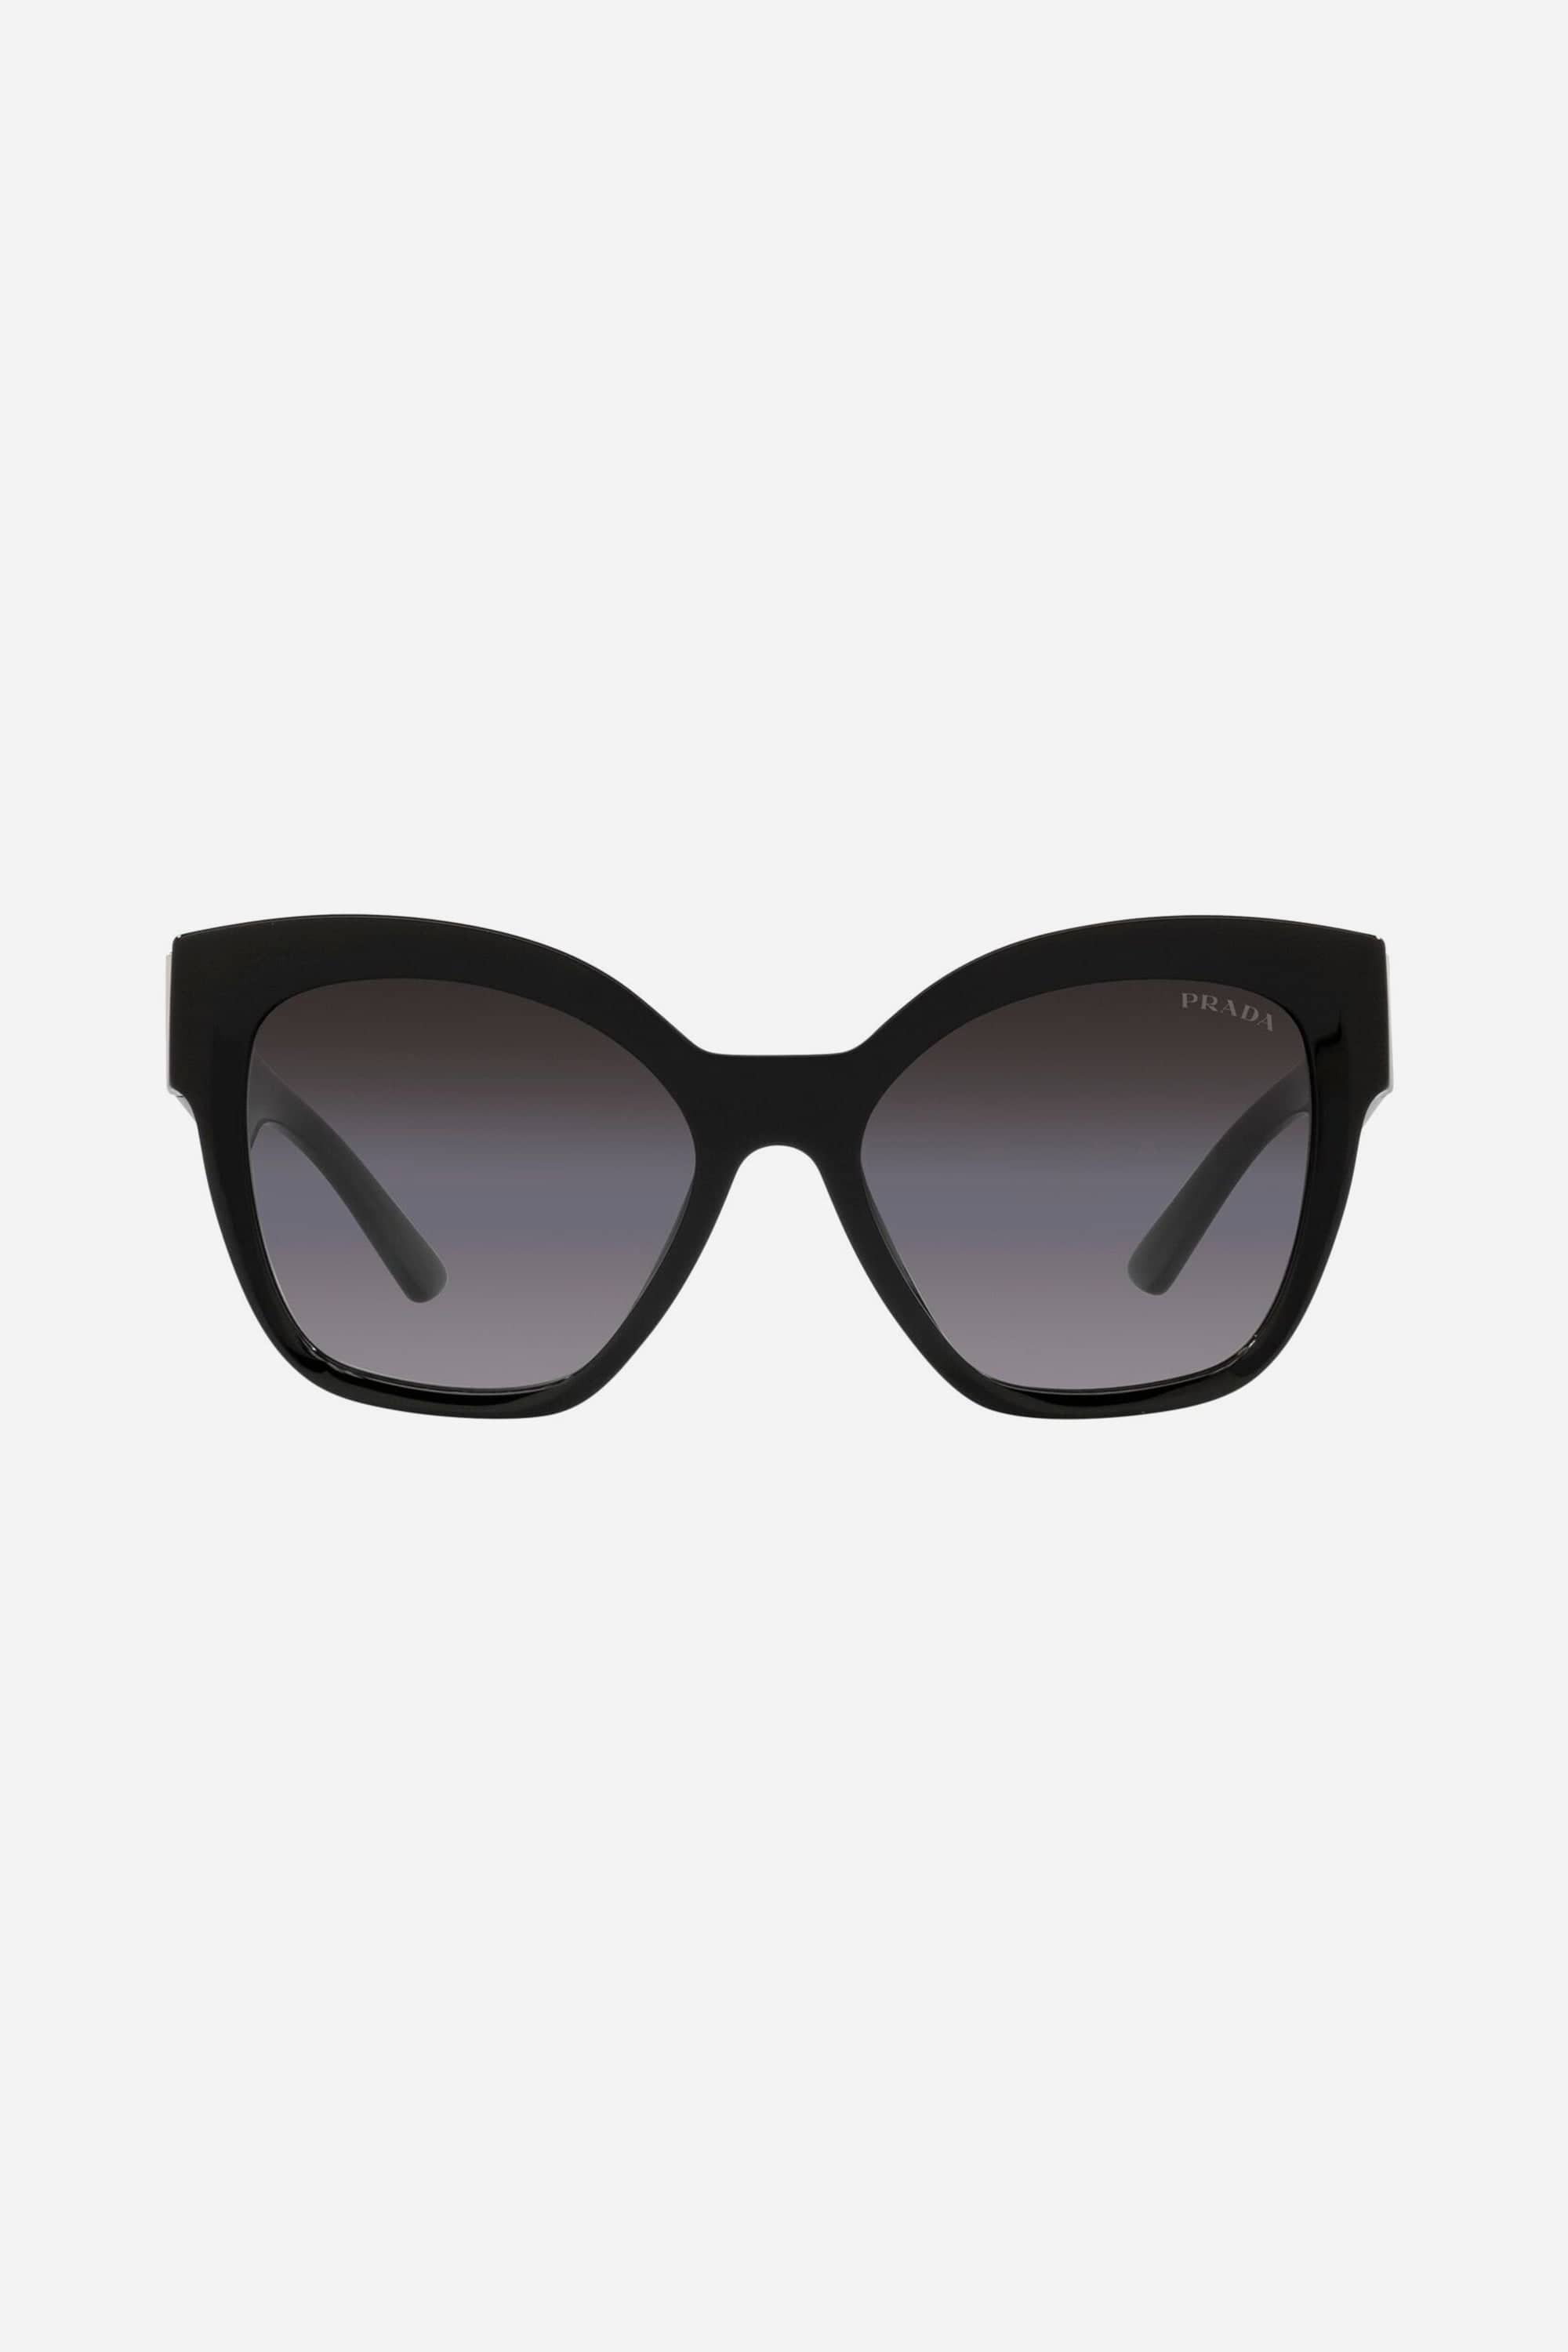 Prada black cat eye with brand logo sunglasses - Eyewear Club